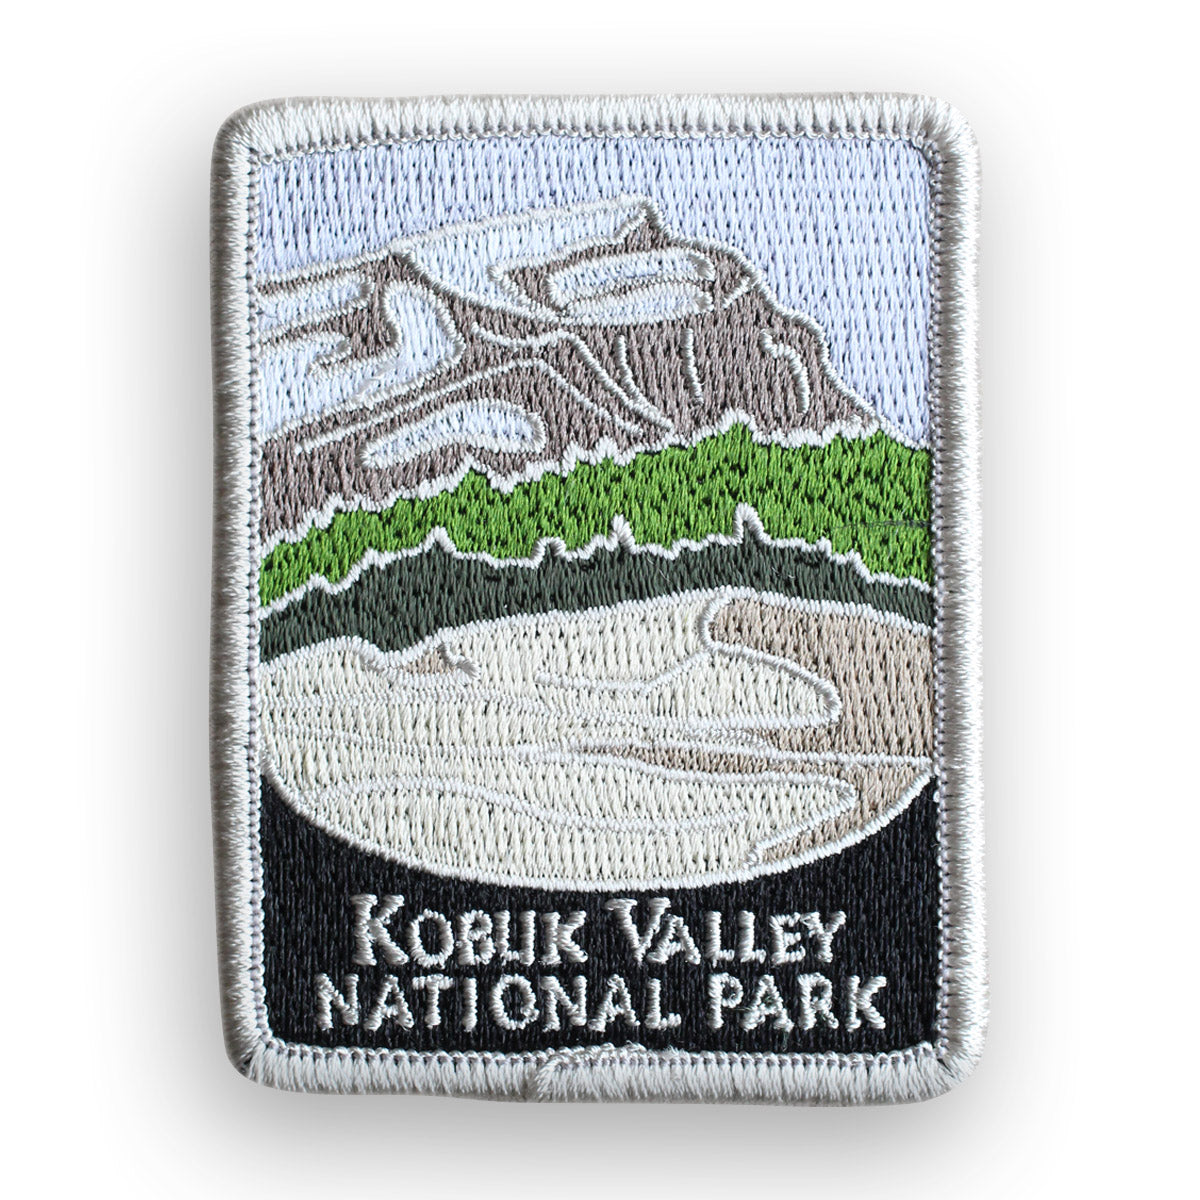 Kobuk Valley National Park Traveler Patch